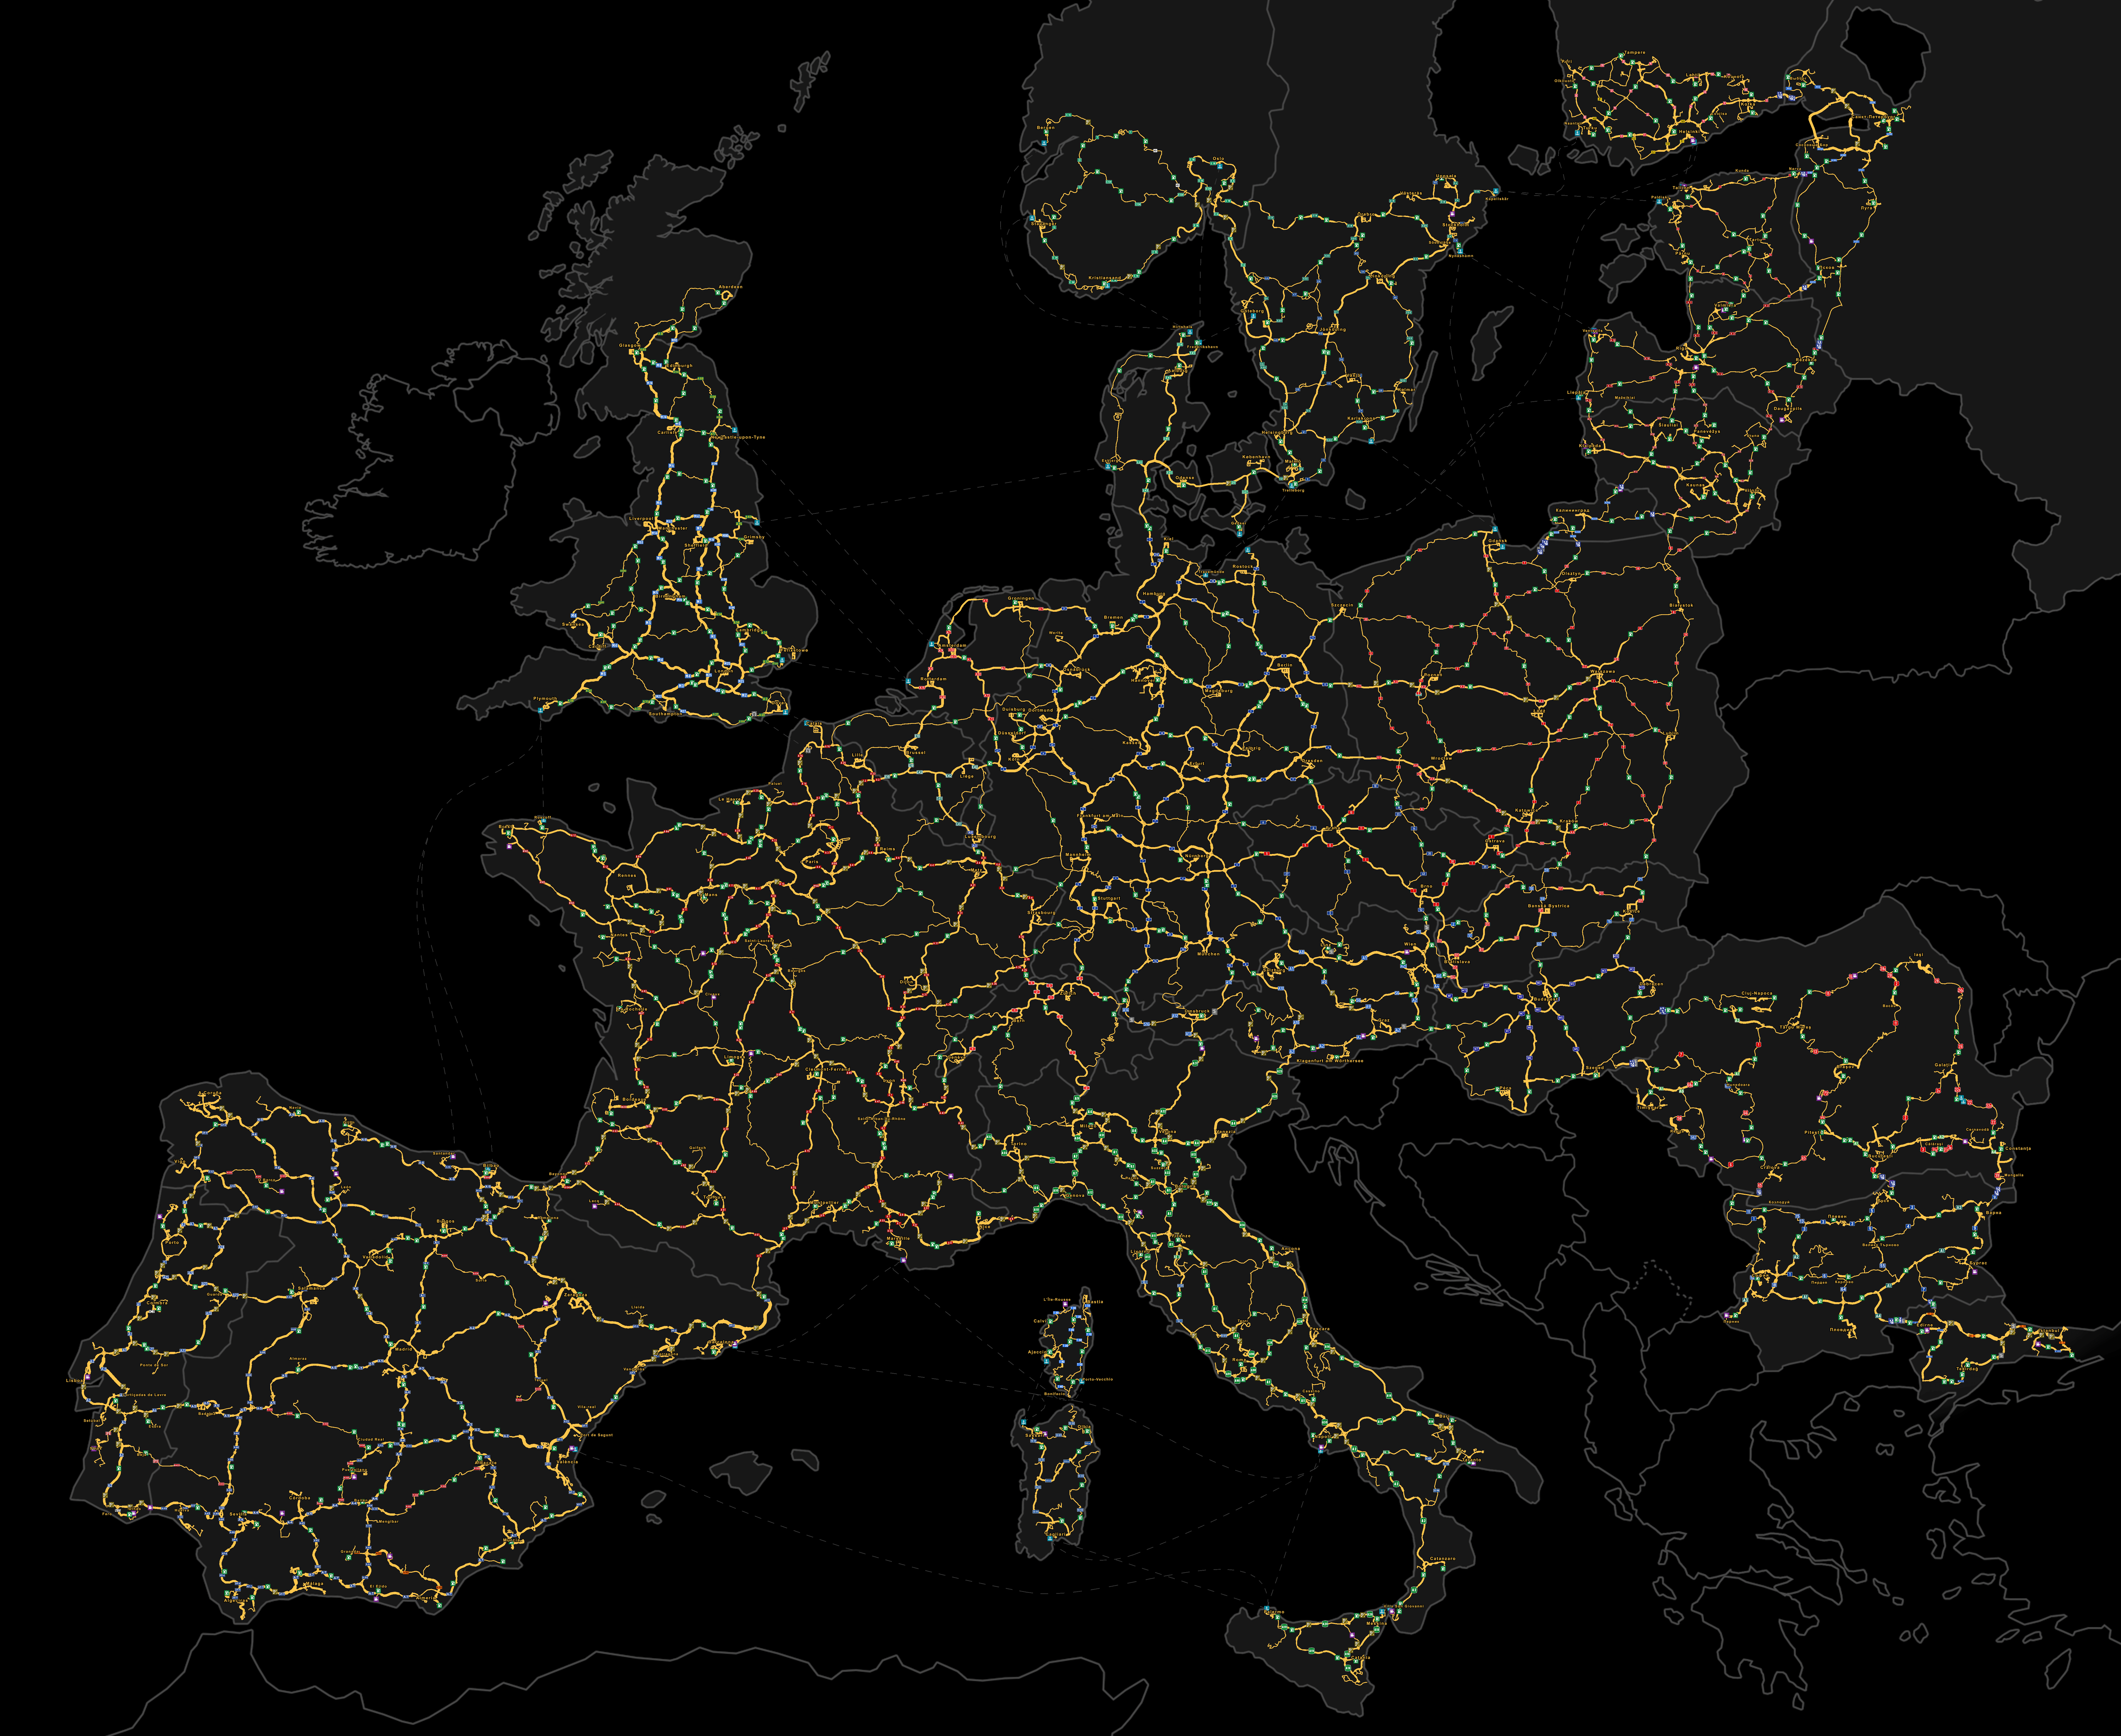 Euro Truck Simulator Full Map